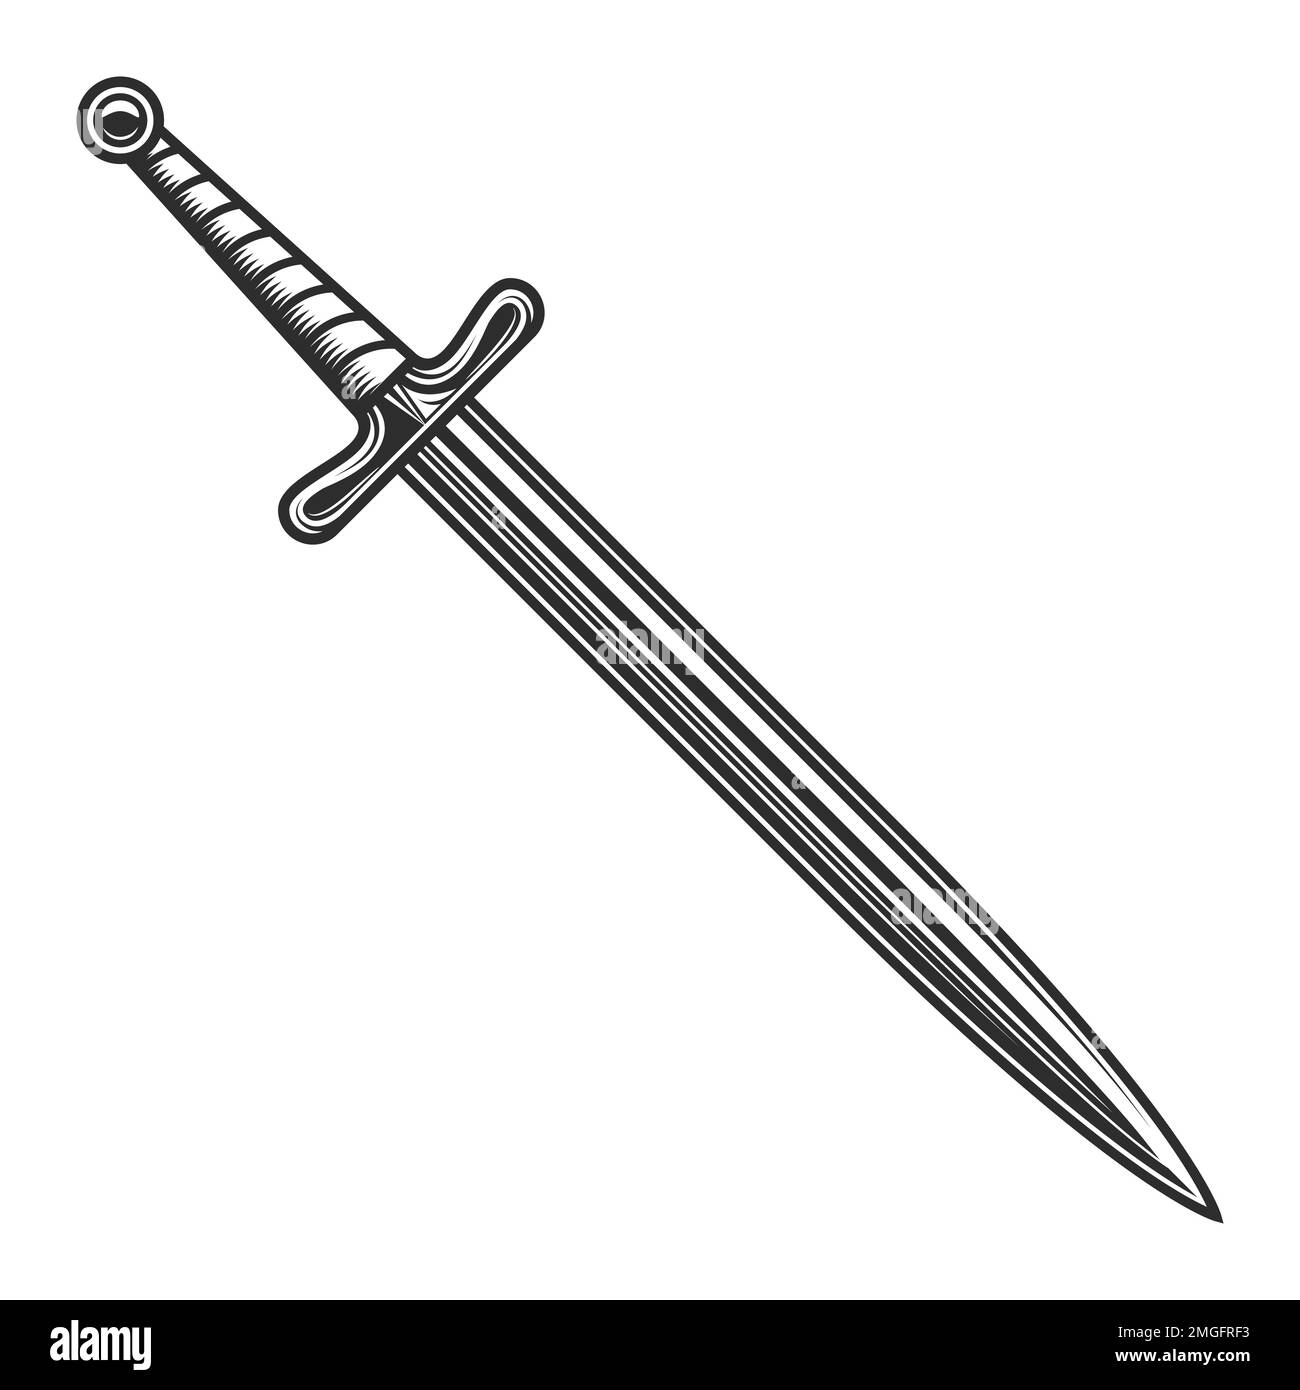 Warrior sword isolated on white in vintage monochrome retro style illustration Stock Photo